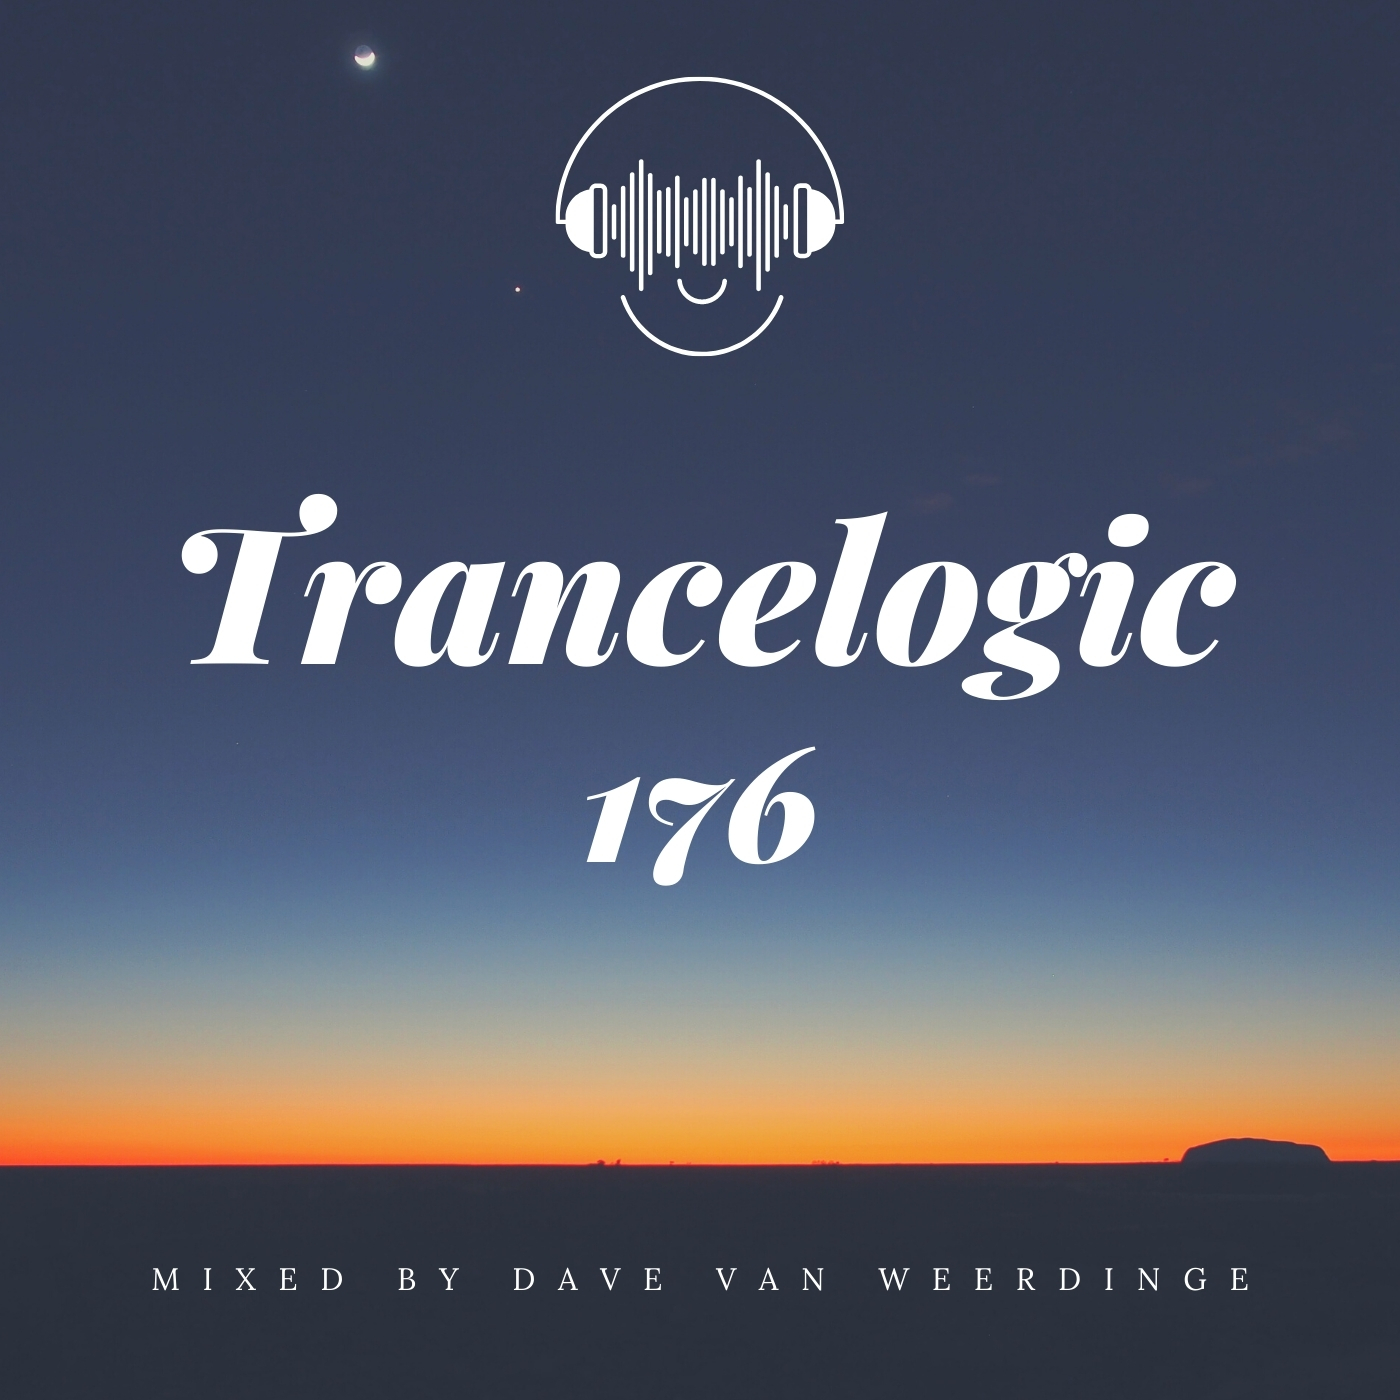 Trancelogic 176 by Dave van Weerdinge